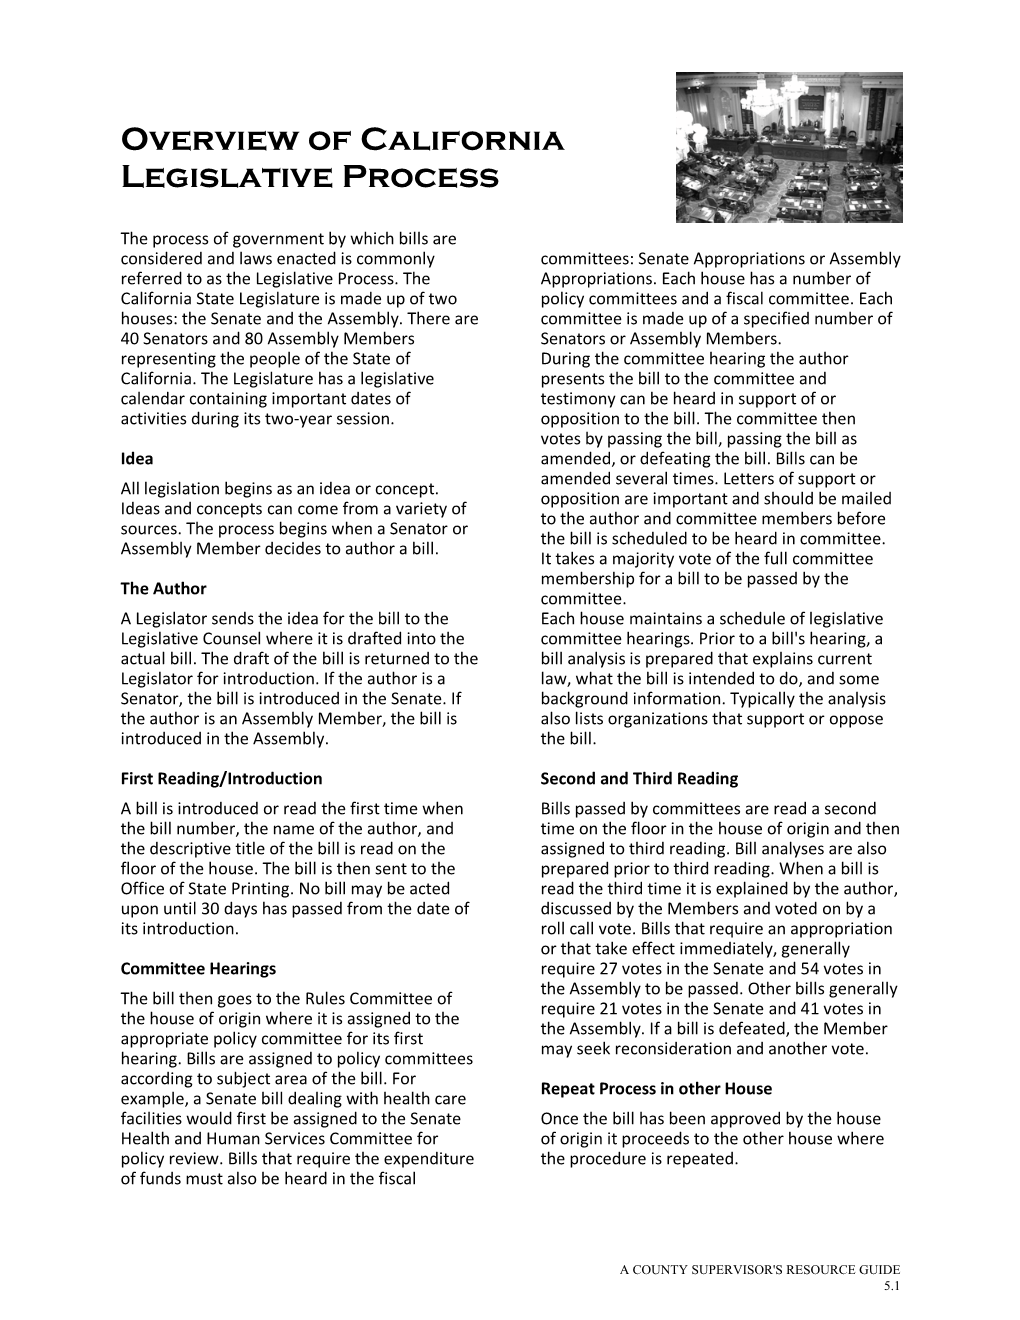 Overview of California Legislative Process